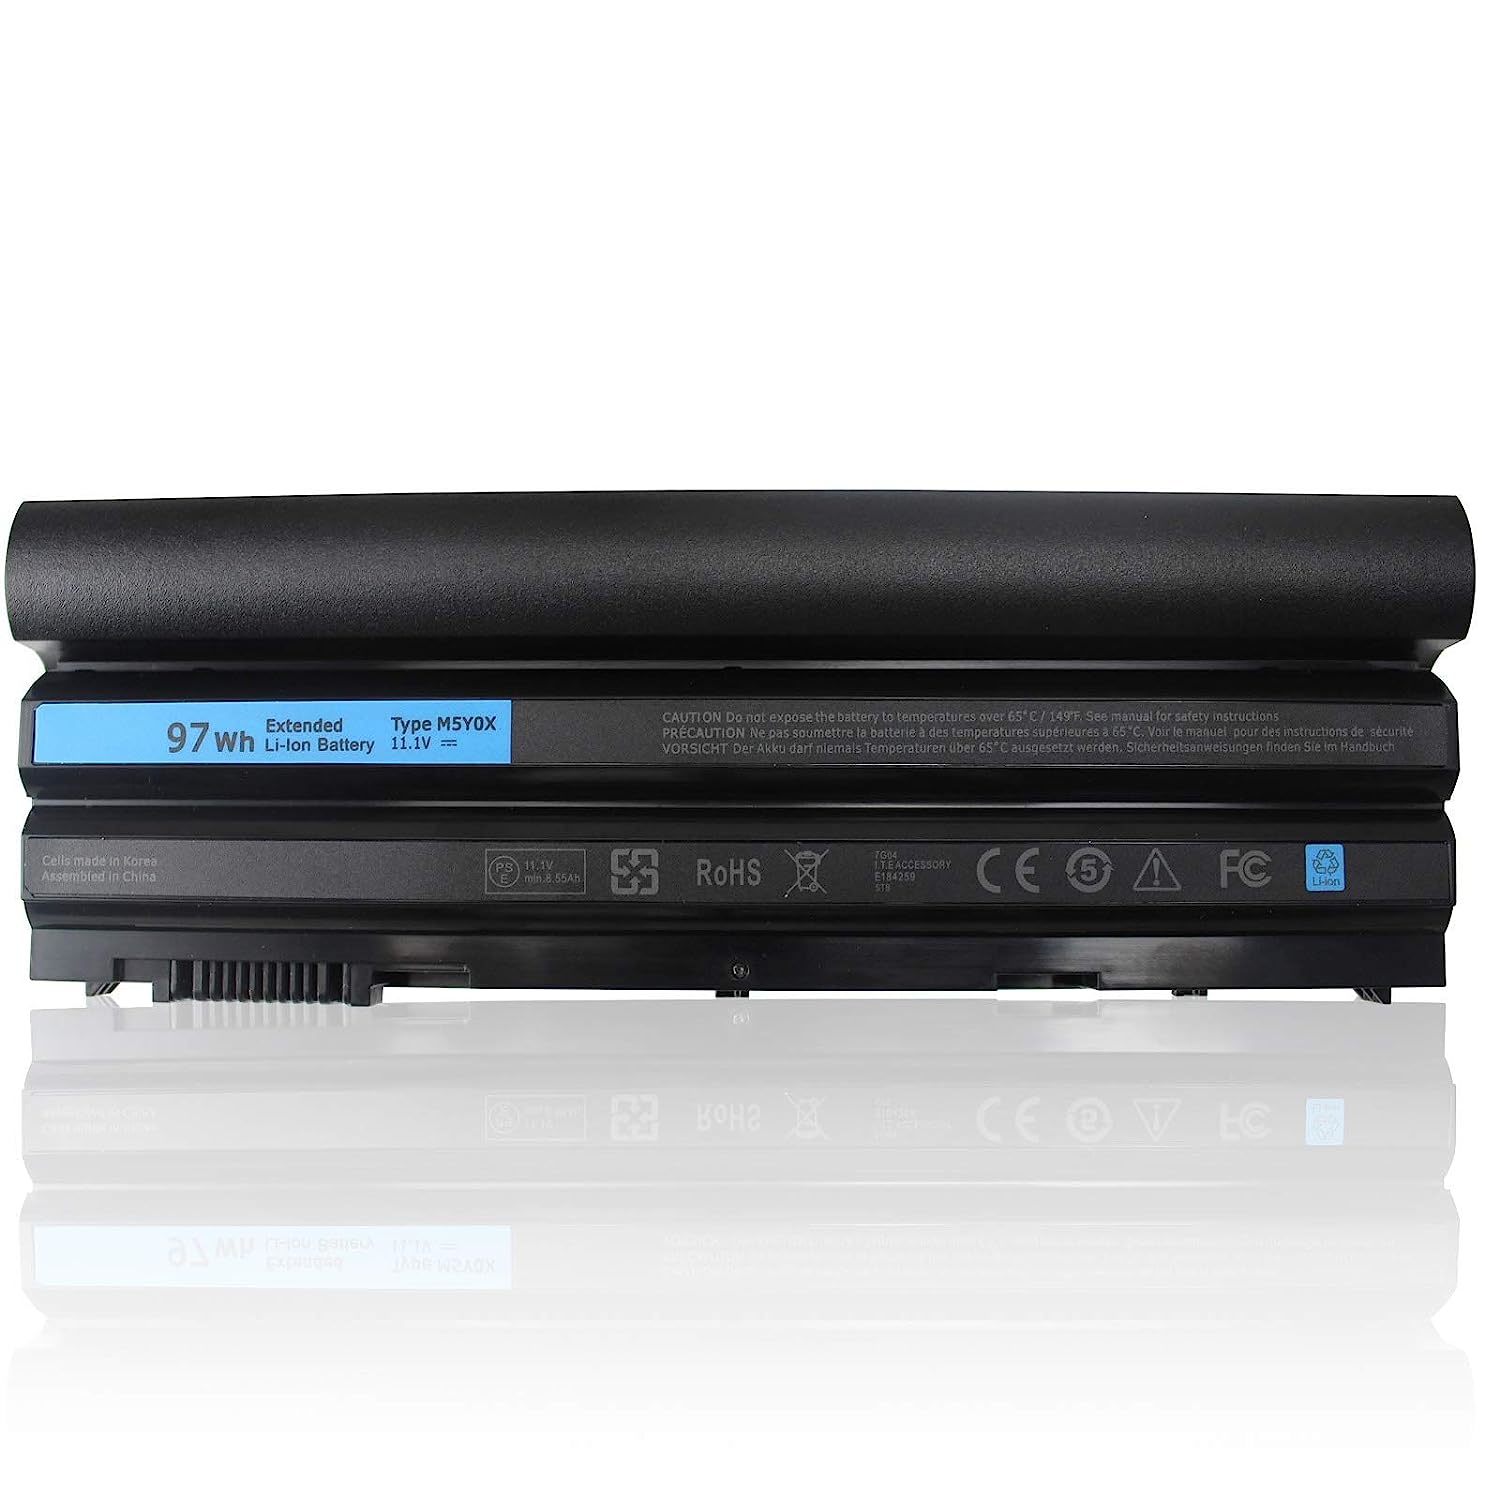 Primary image for 97Wh M5Y0X 11.1V Laptop Battery Repalcement For Dell Latitude E6420 E6430 E6520 